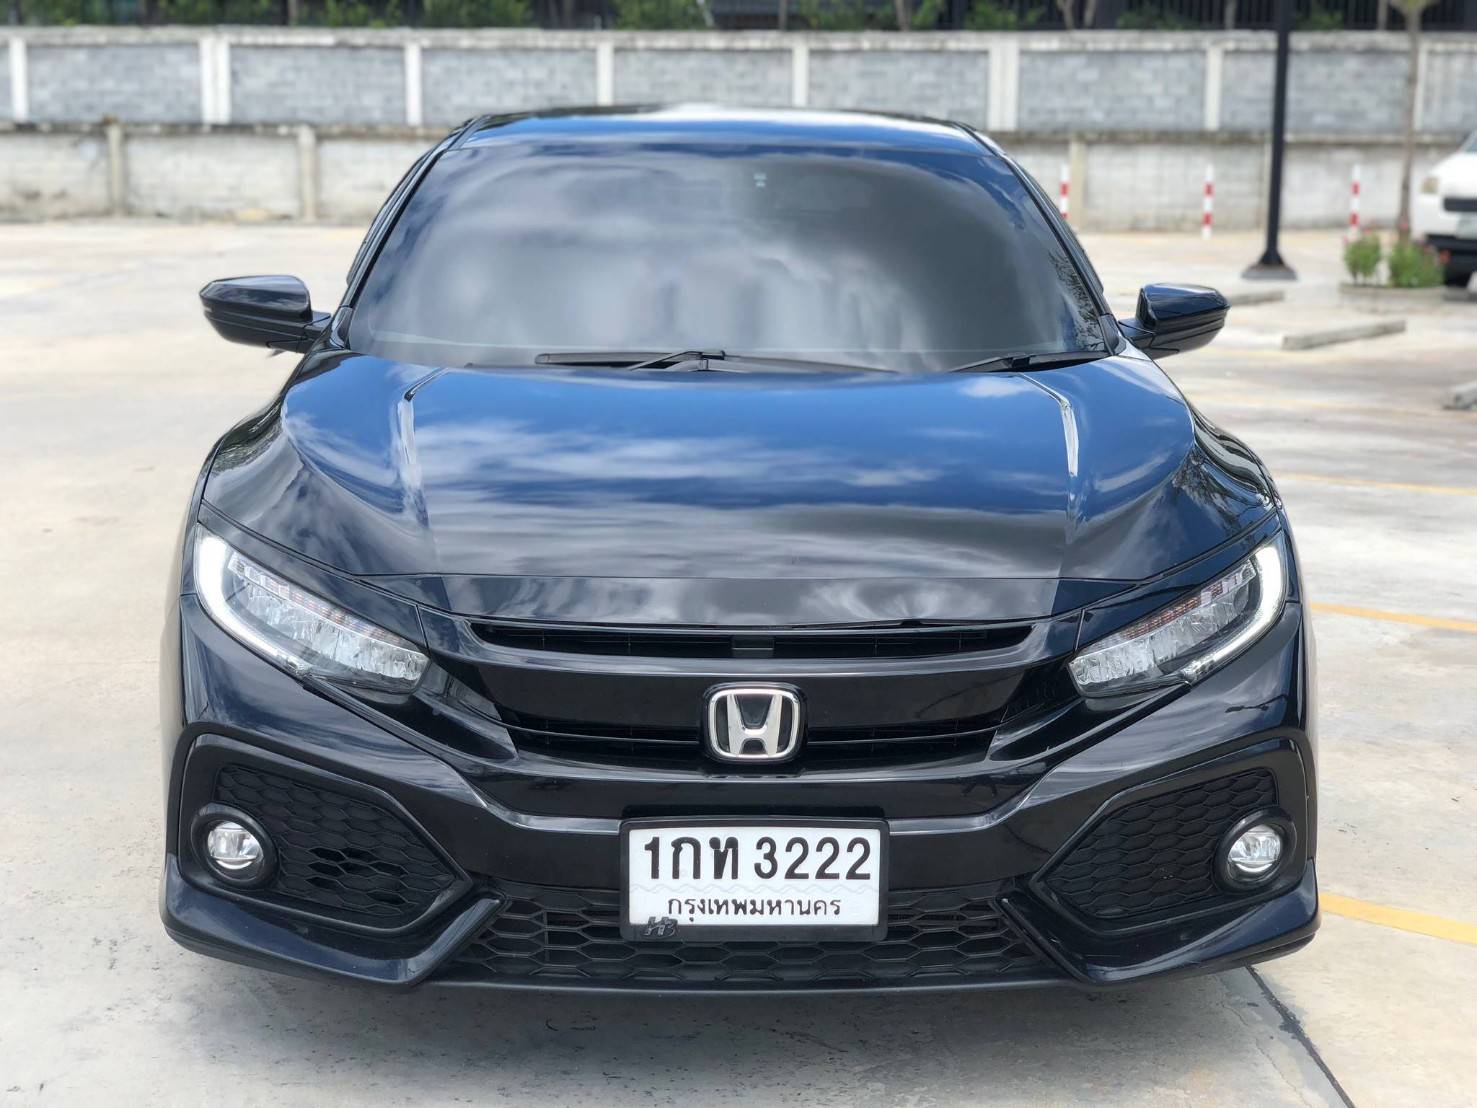 Honda Civic FC โฉม 4 ประตู ปี 2017 สีดำ